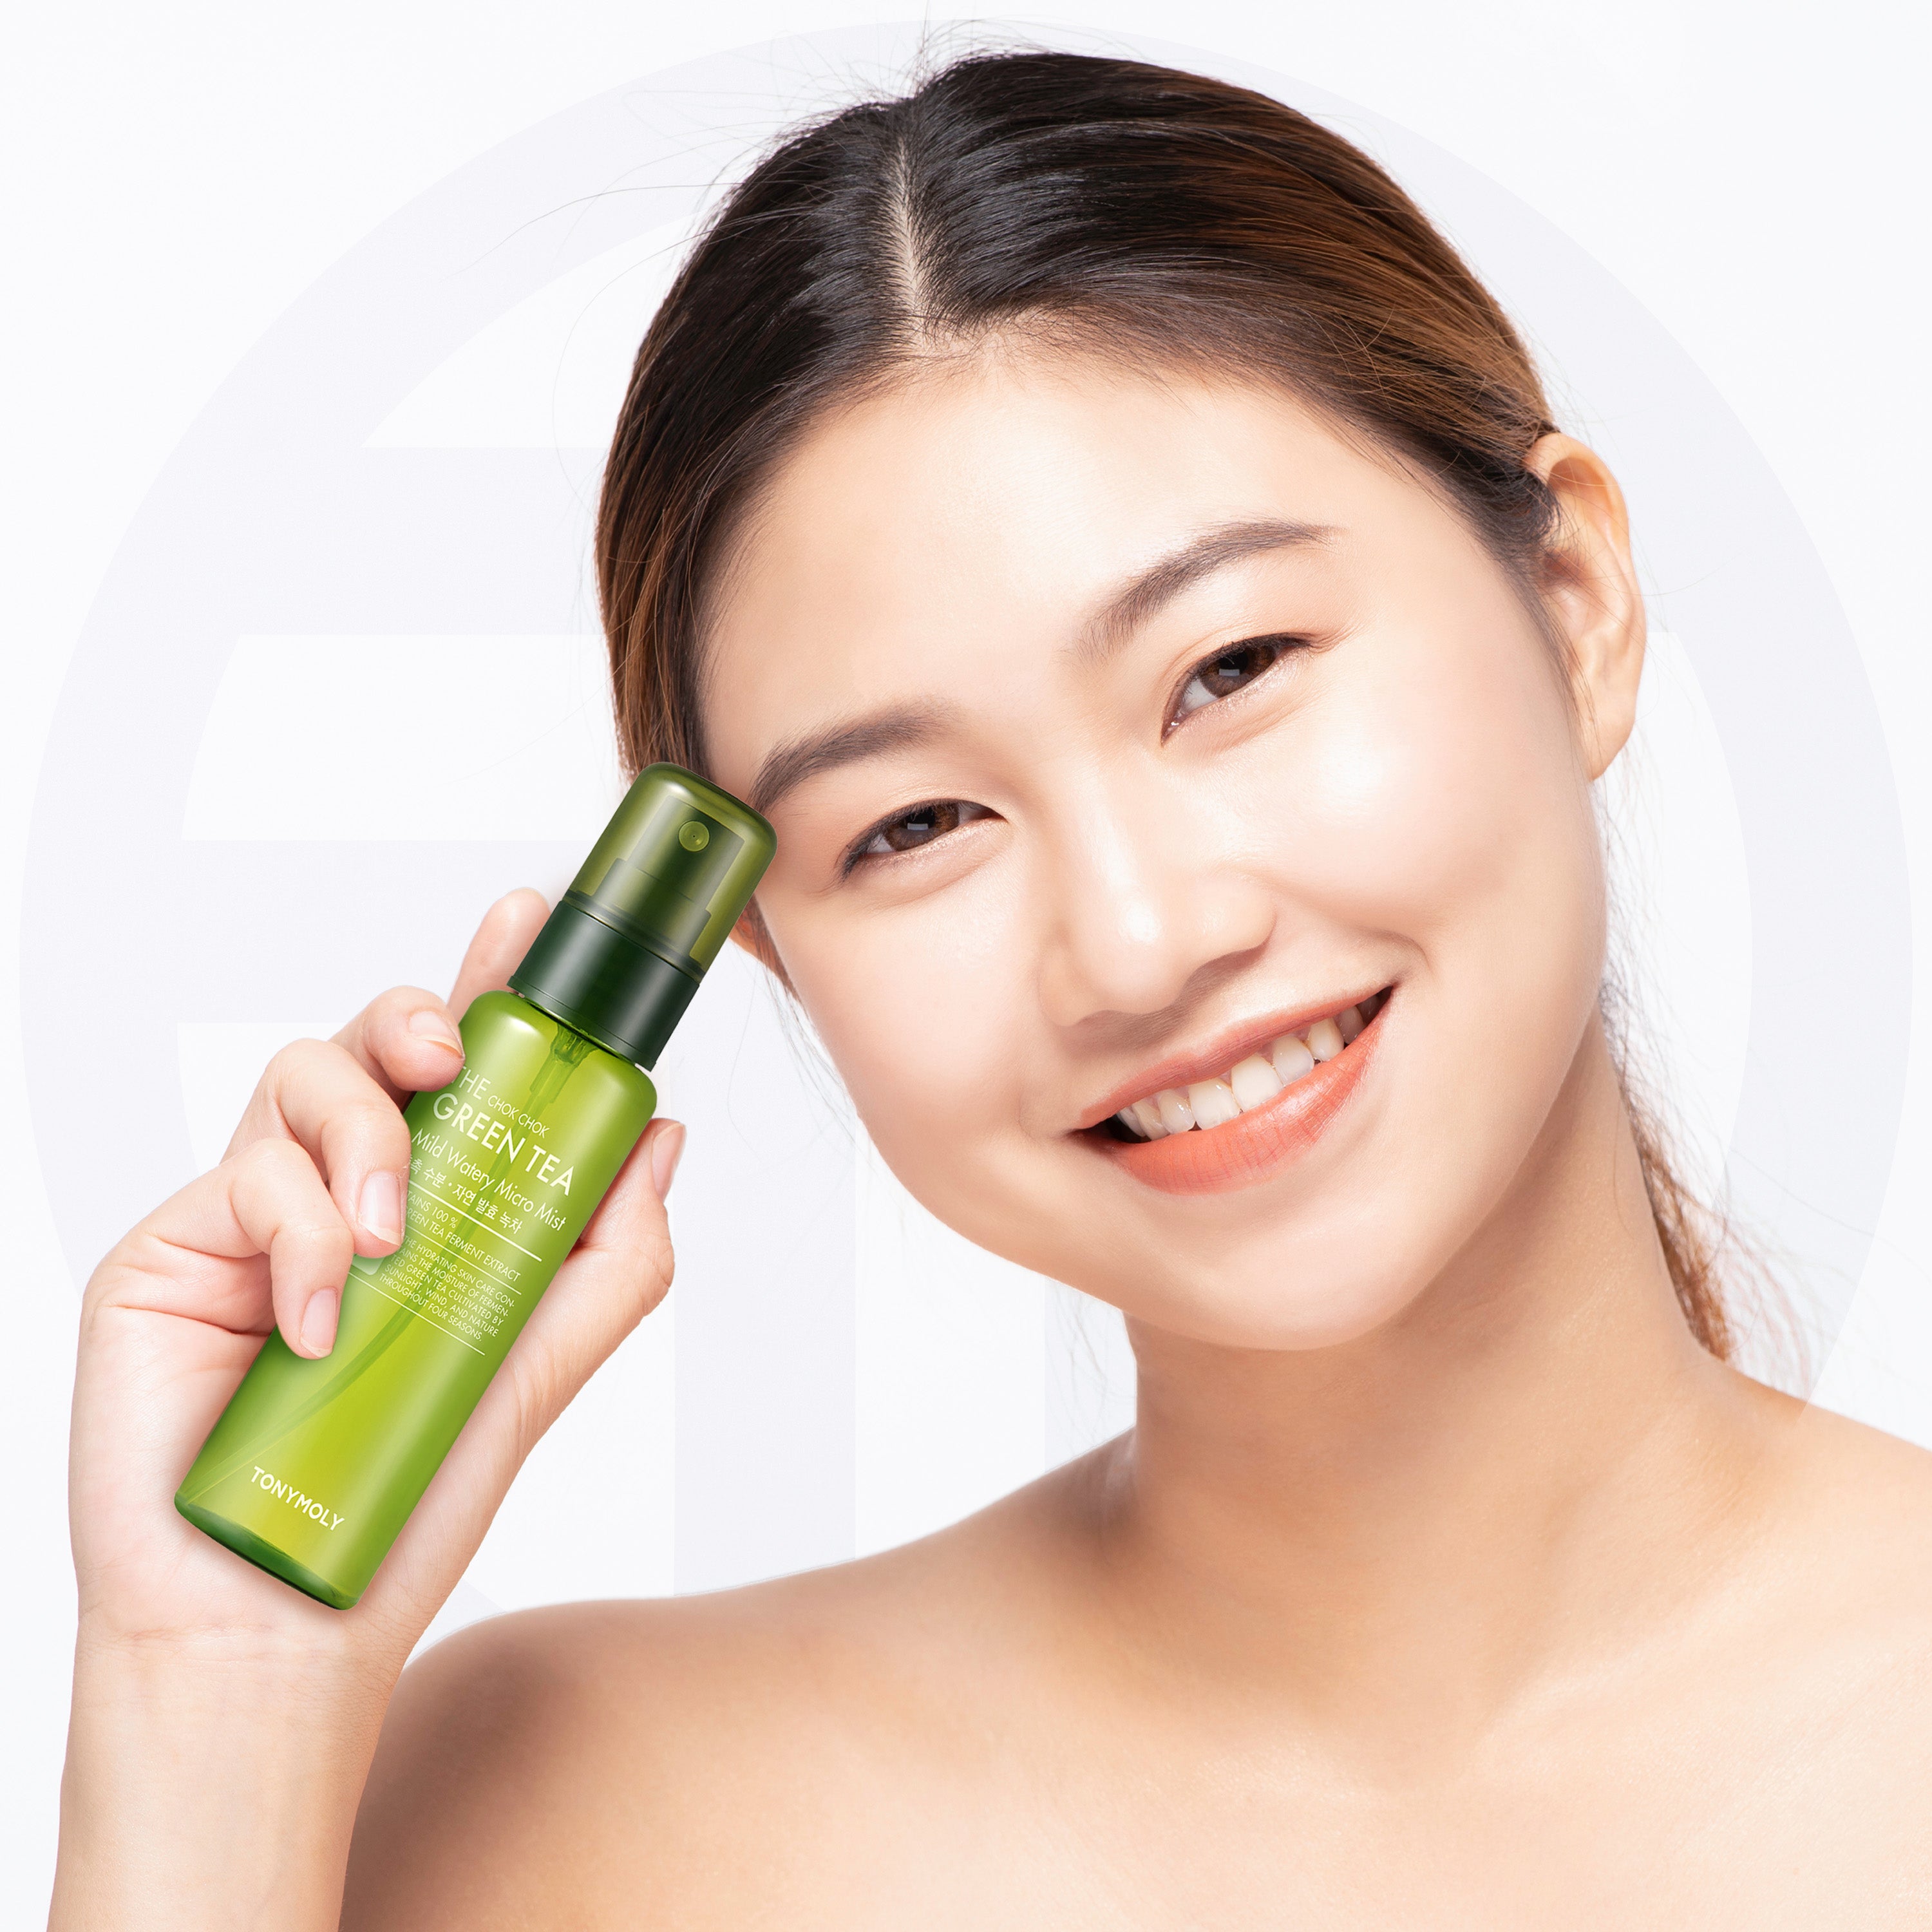 TONYMOLY The Chok Chok Green Tea Watery Micro Mist 90ml - Face Mist | Korean Skin Care